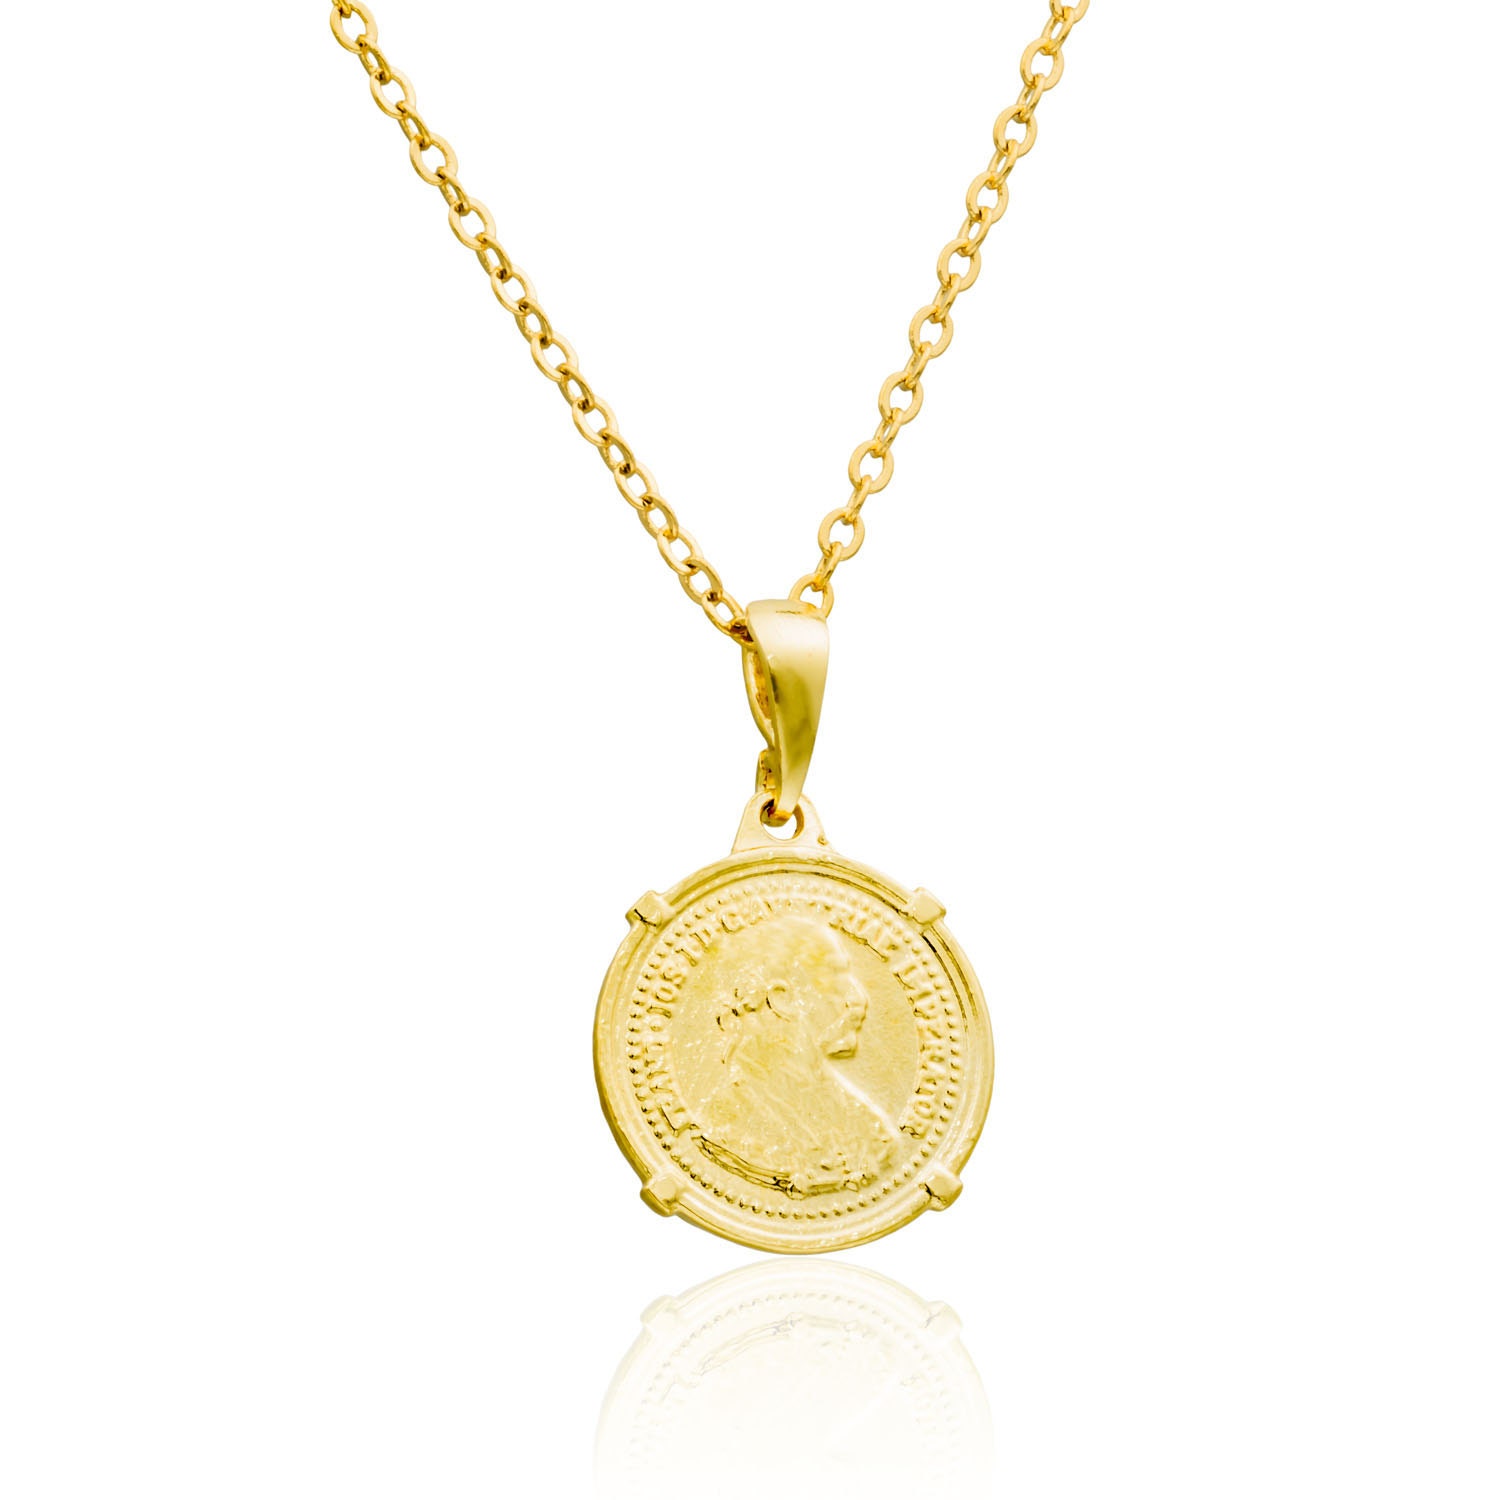 Coin Necklace Gold filled 14K pendant coin pendant vintage